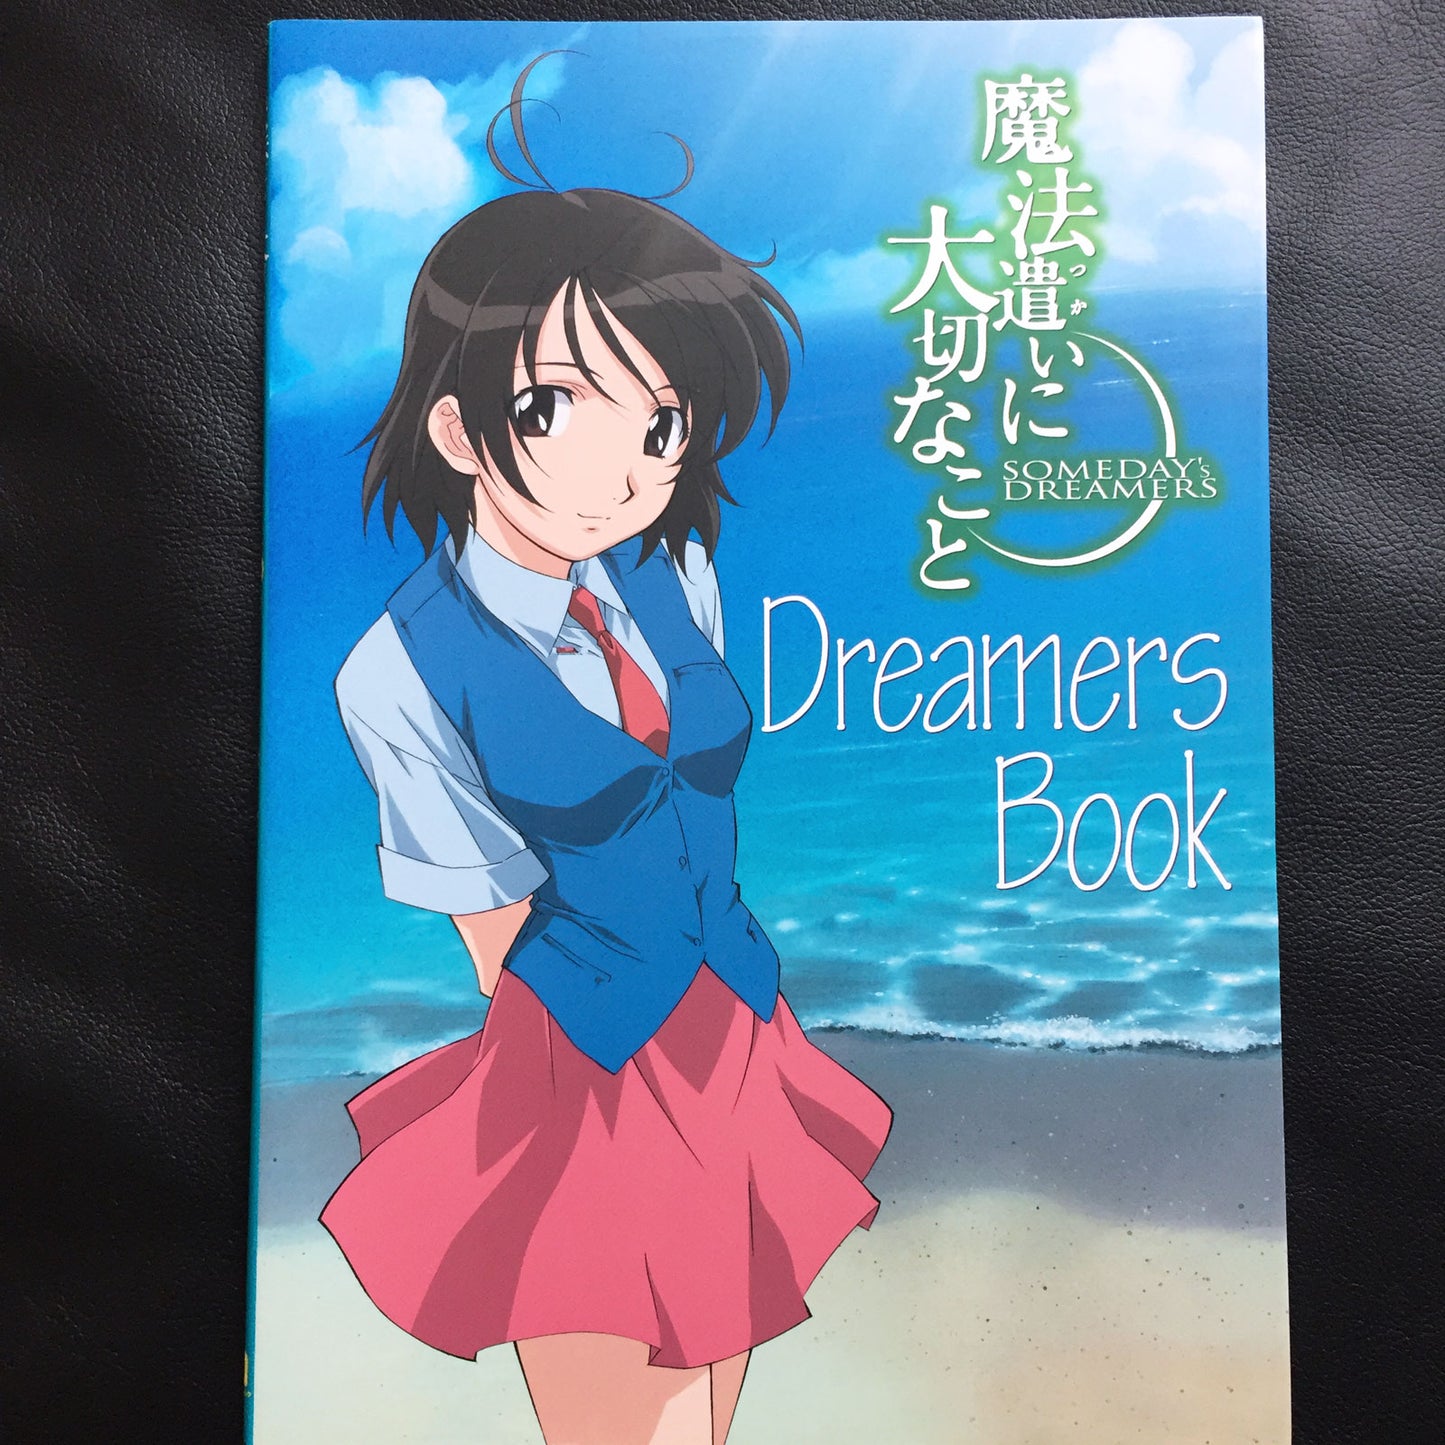 Mahoutsukai ni Taisetsu na Koto Someday's Dreamers Dreamers Book